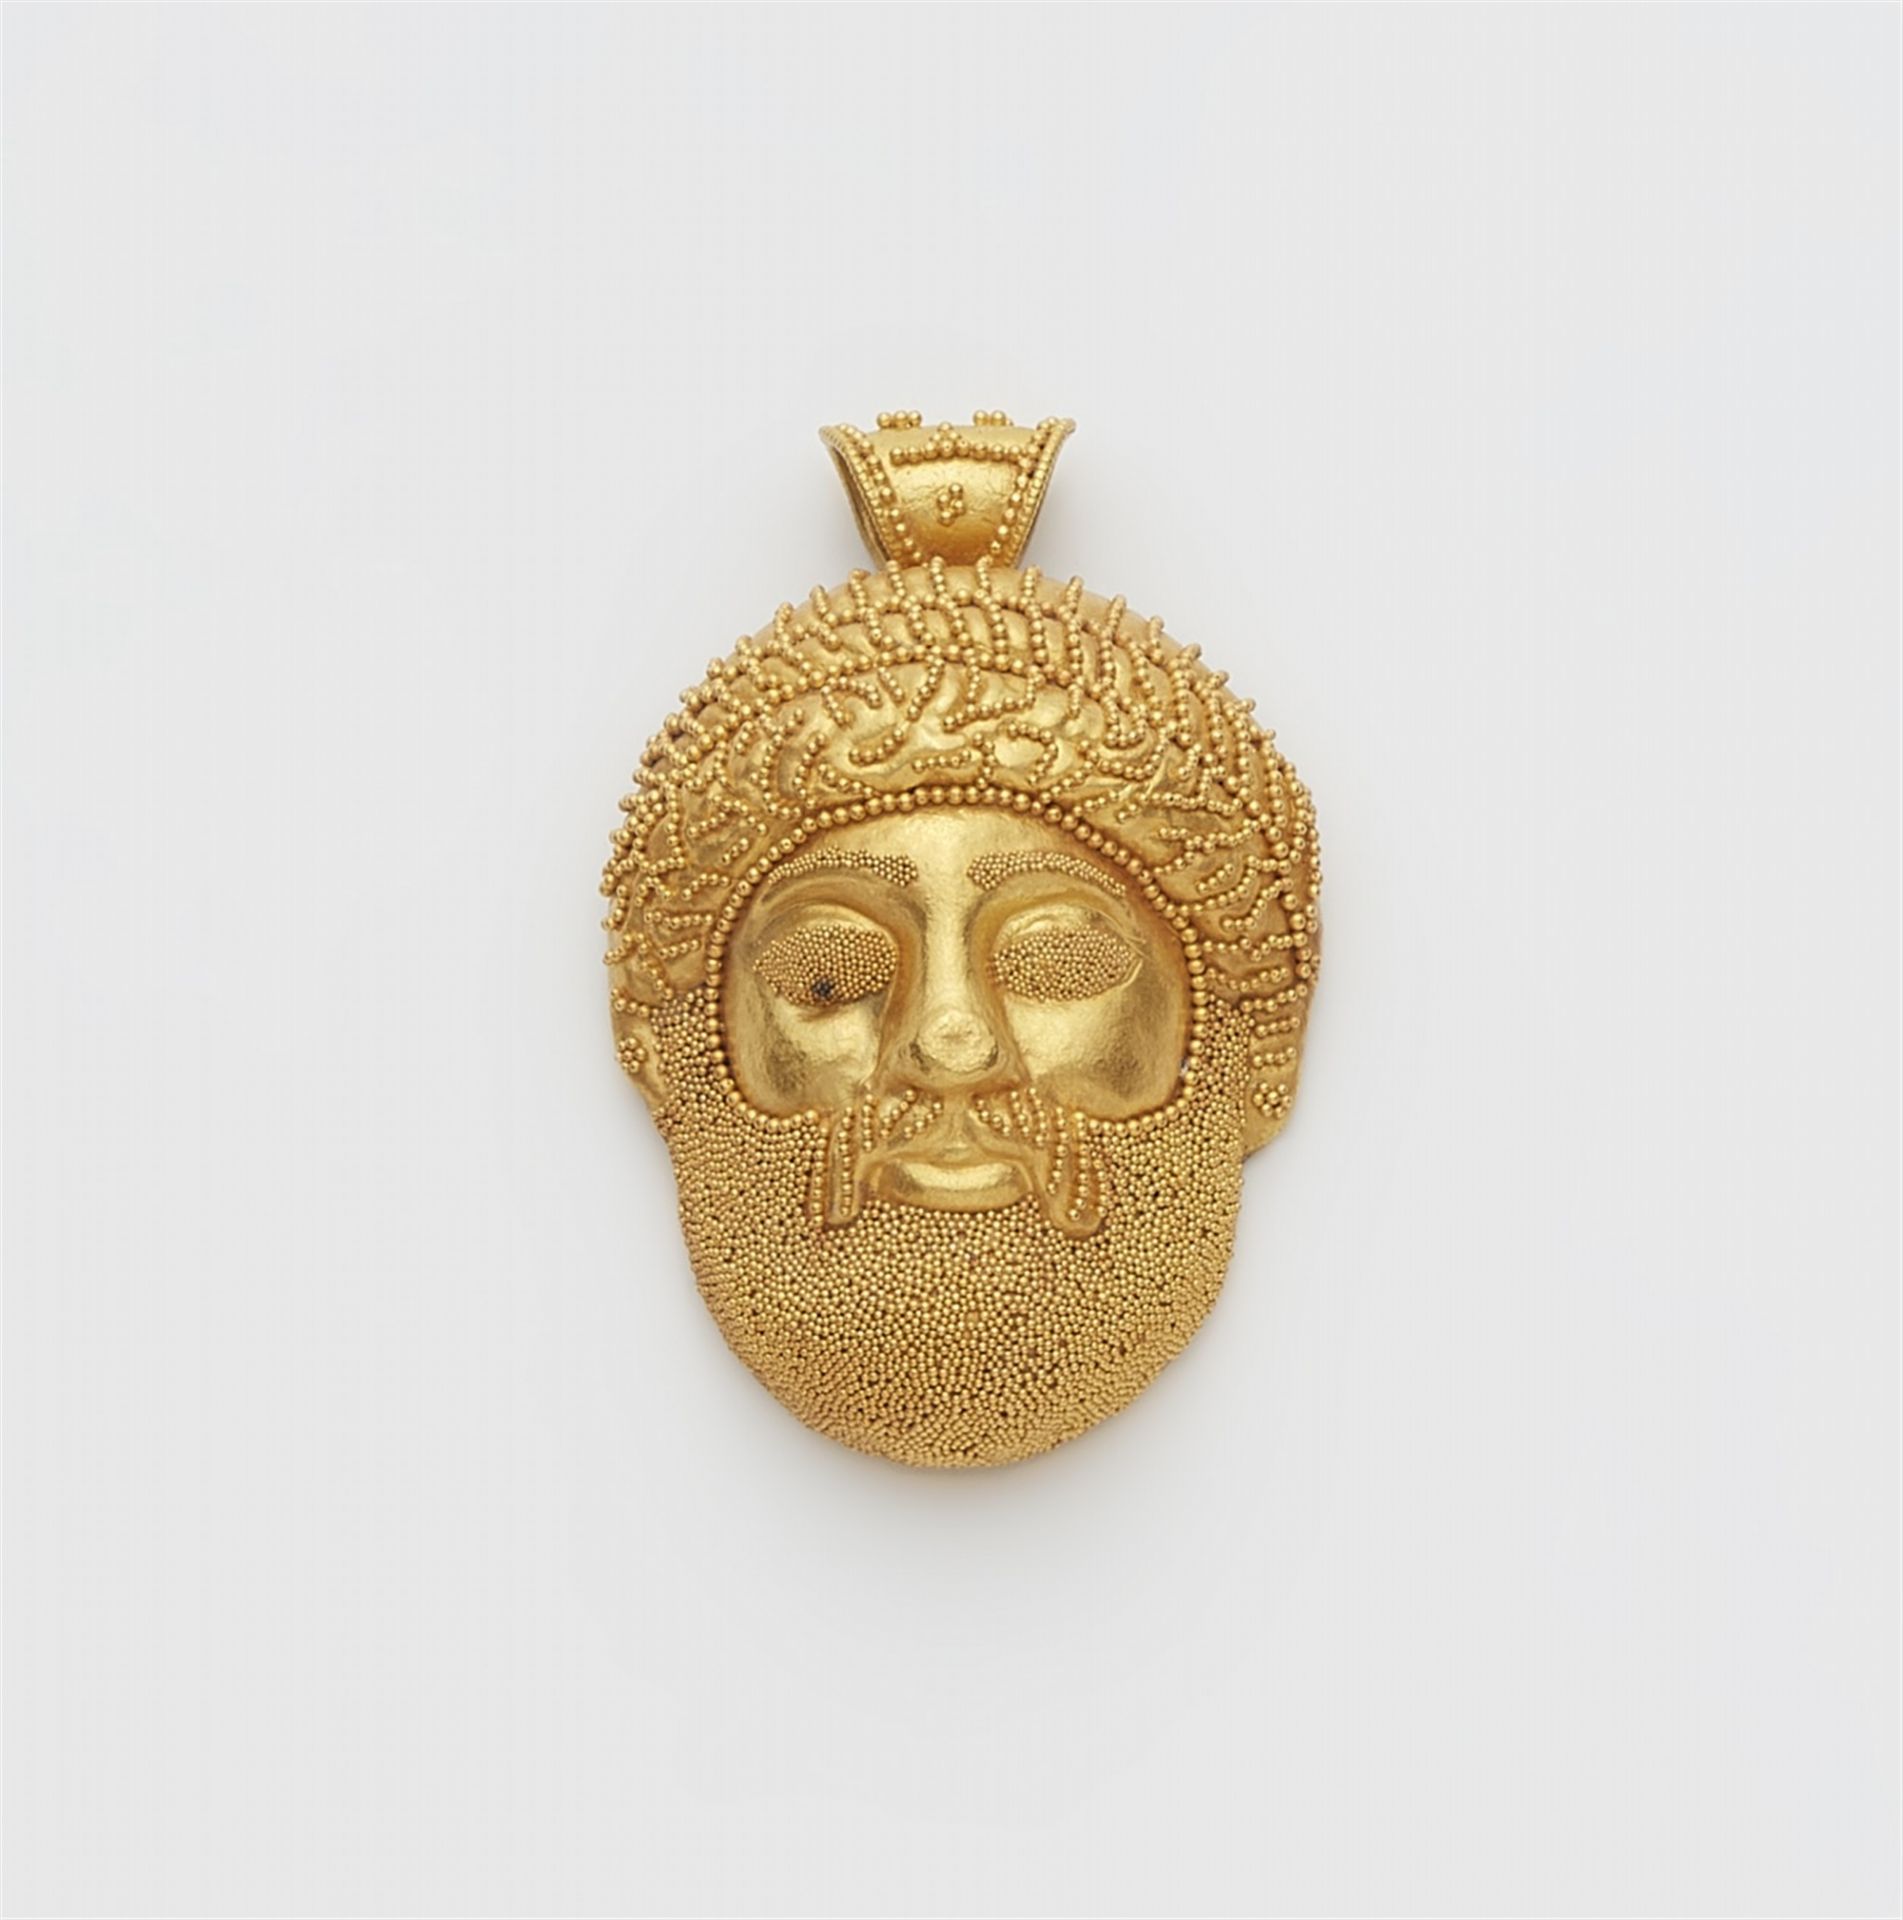 A gold granulation pendant